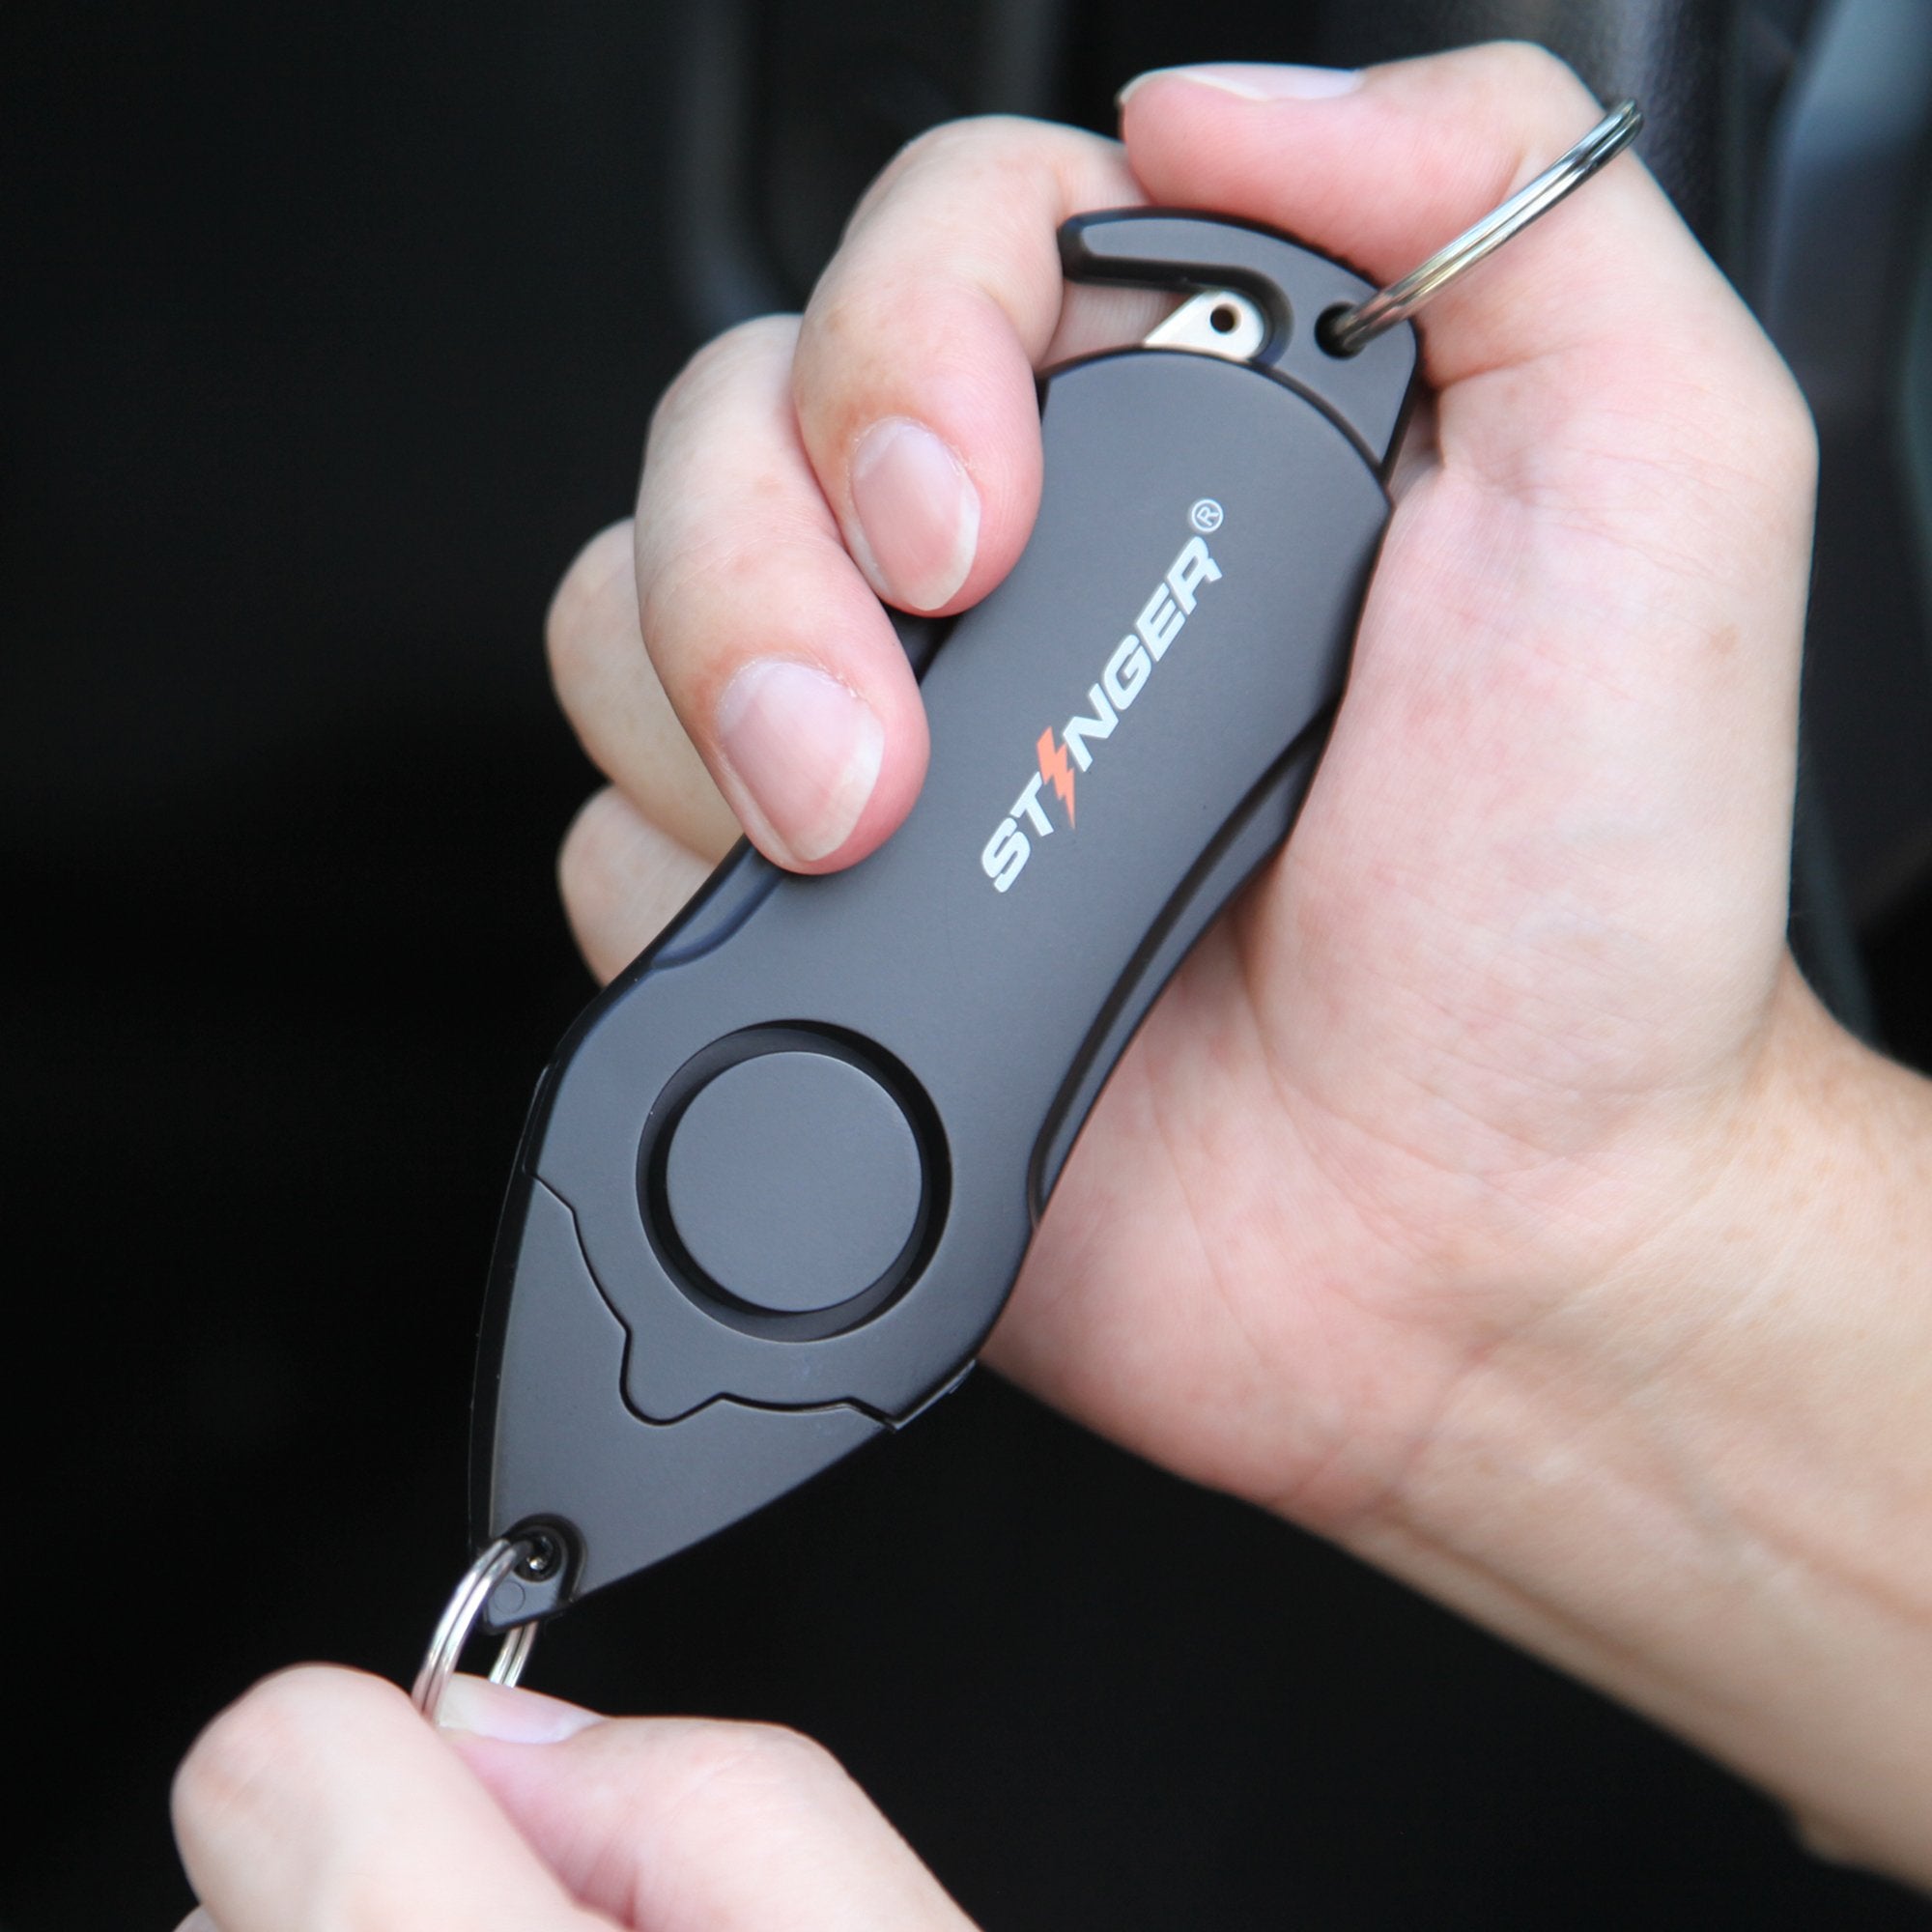 Stinger Life-Saving Whip Car Emergency Tools + Personal Alarm (Black)